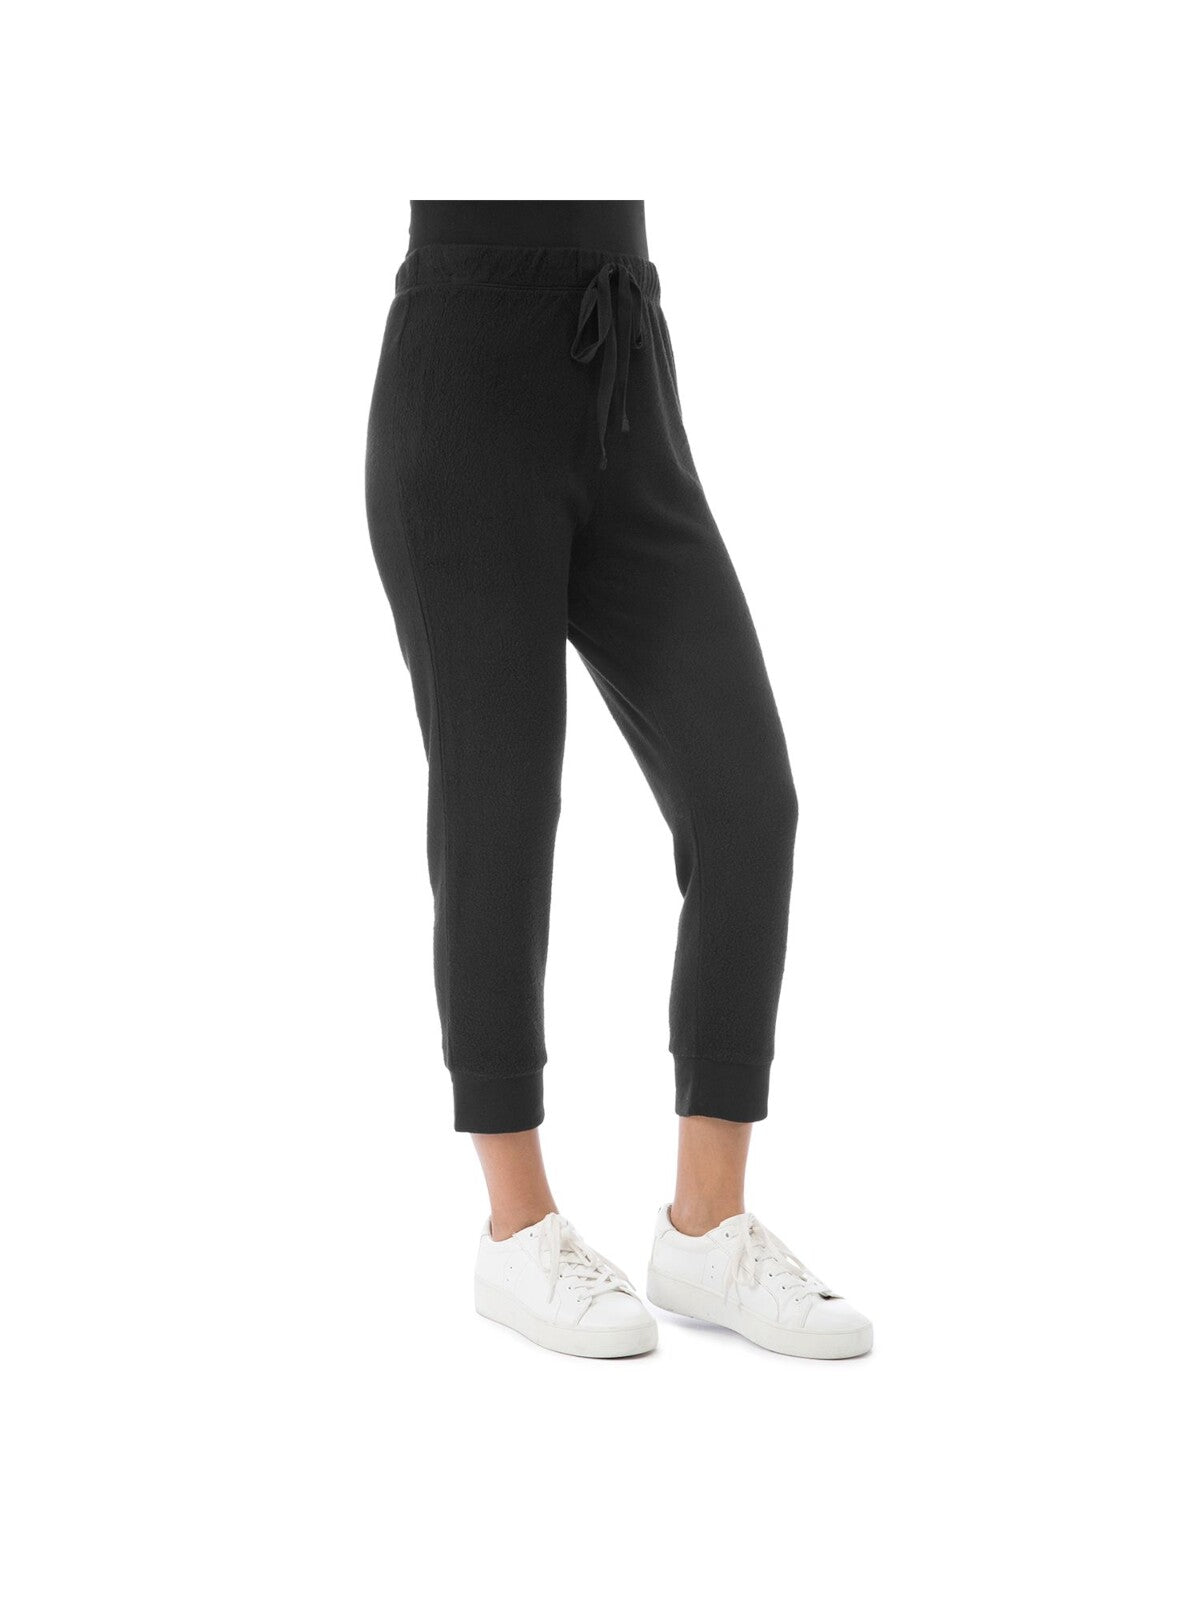 B COLLECTION Womens Black Stretch Pants XL